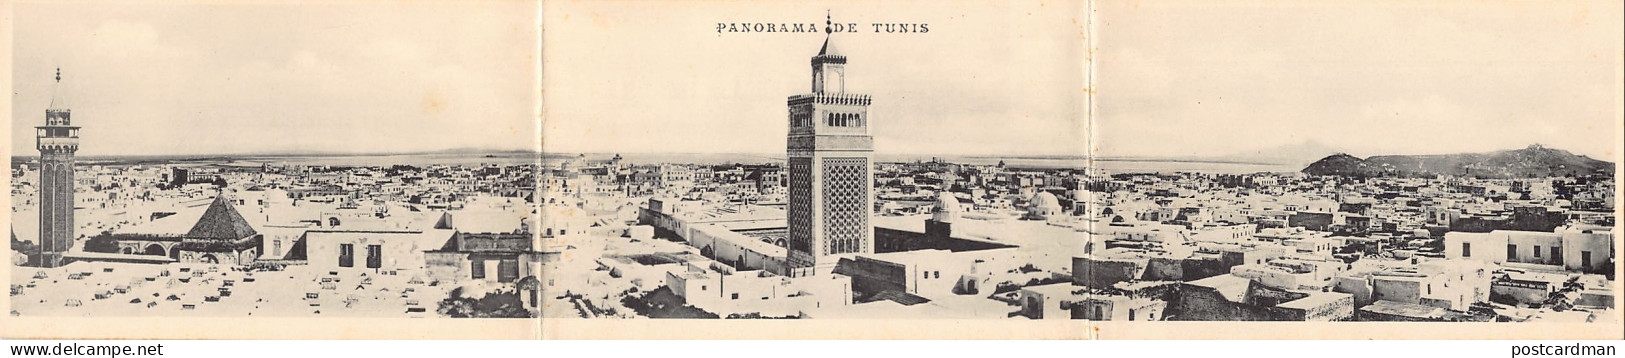 Panorama De TUNIS - Carte à 3 Volets - Ed. Inconnu  - Tunisie